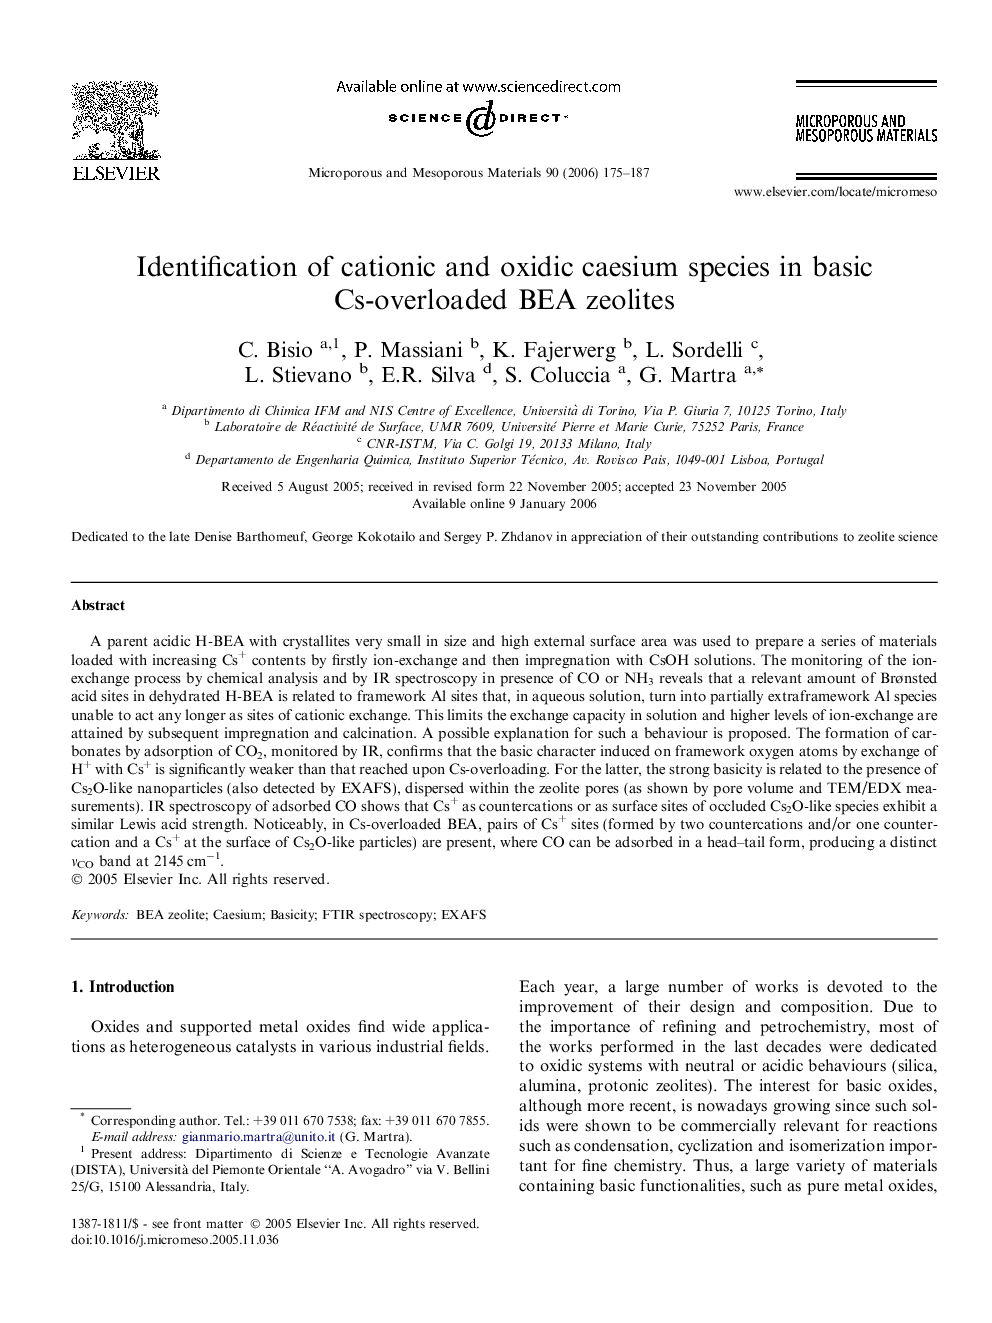 Identification of cationic and oxidic caesium species in basic Cs-overloaded BEA zeolites